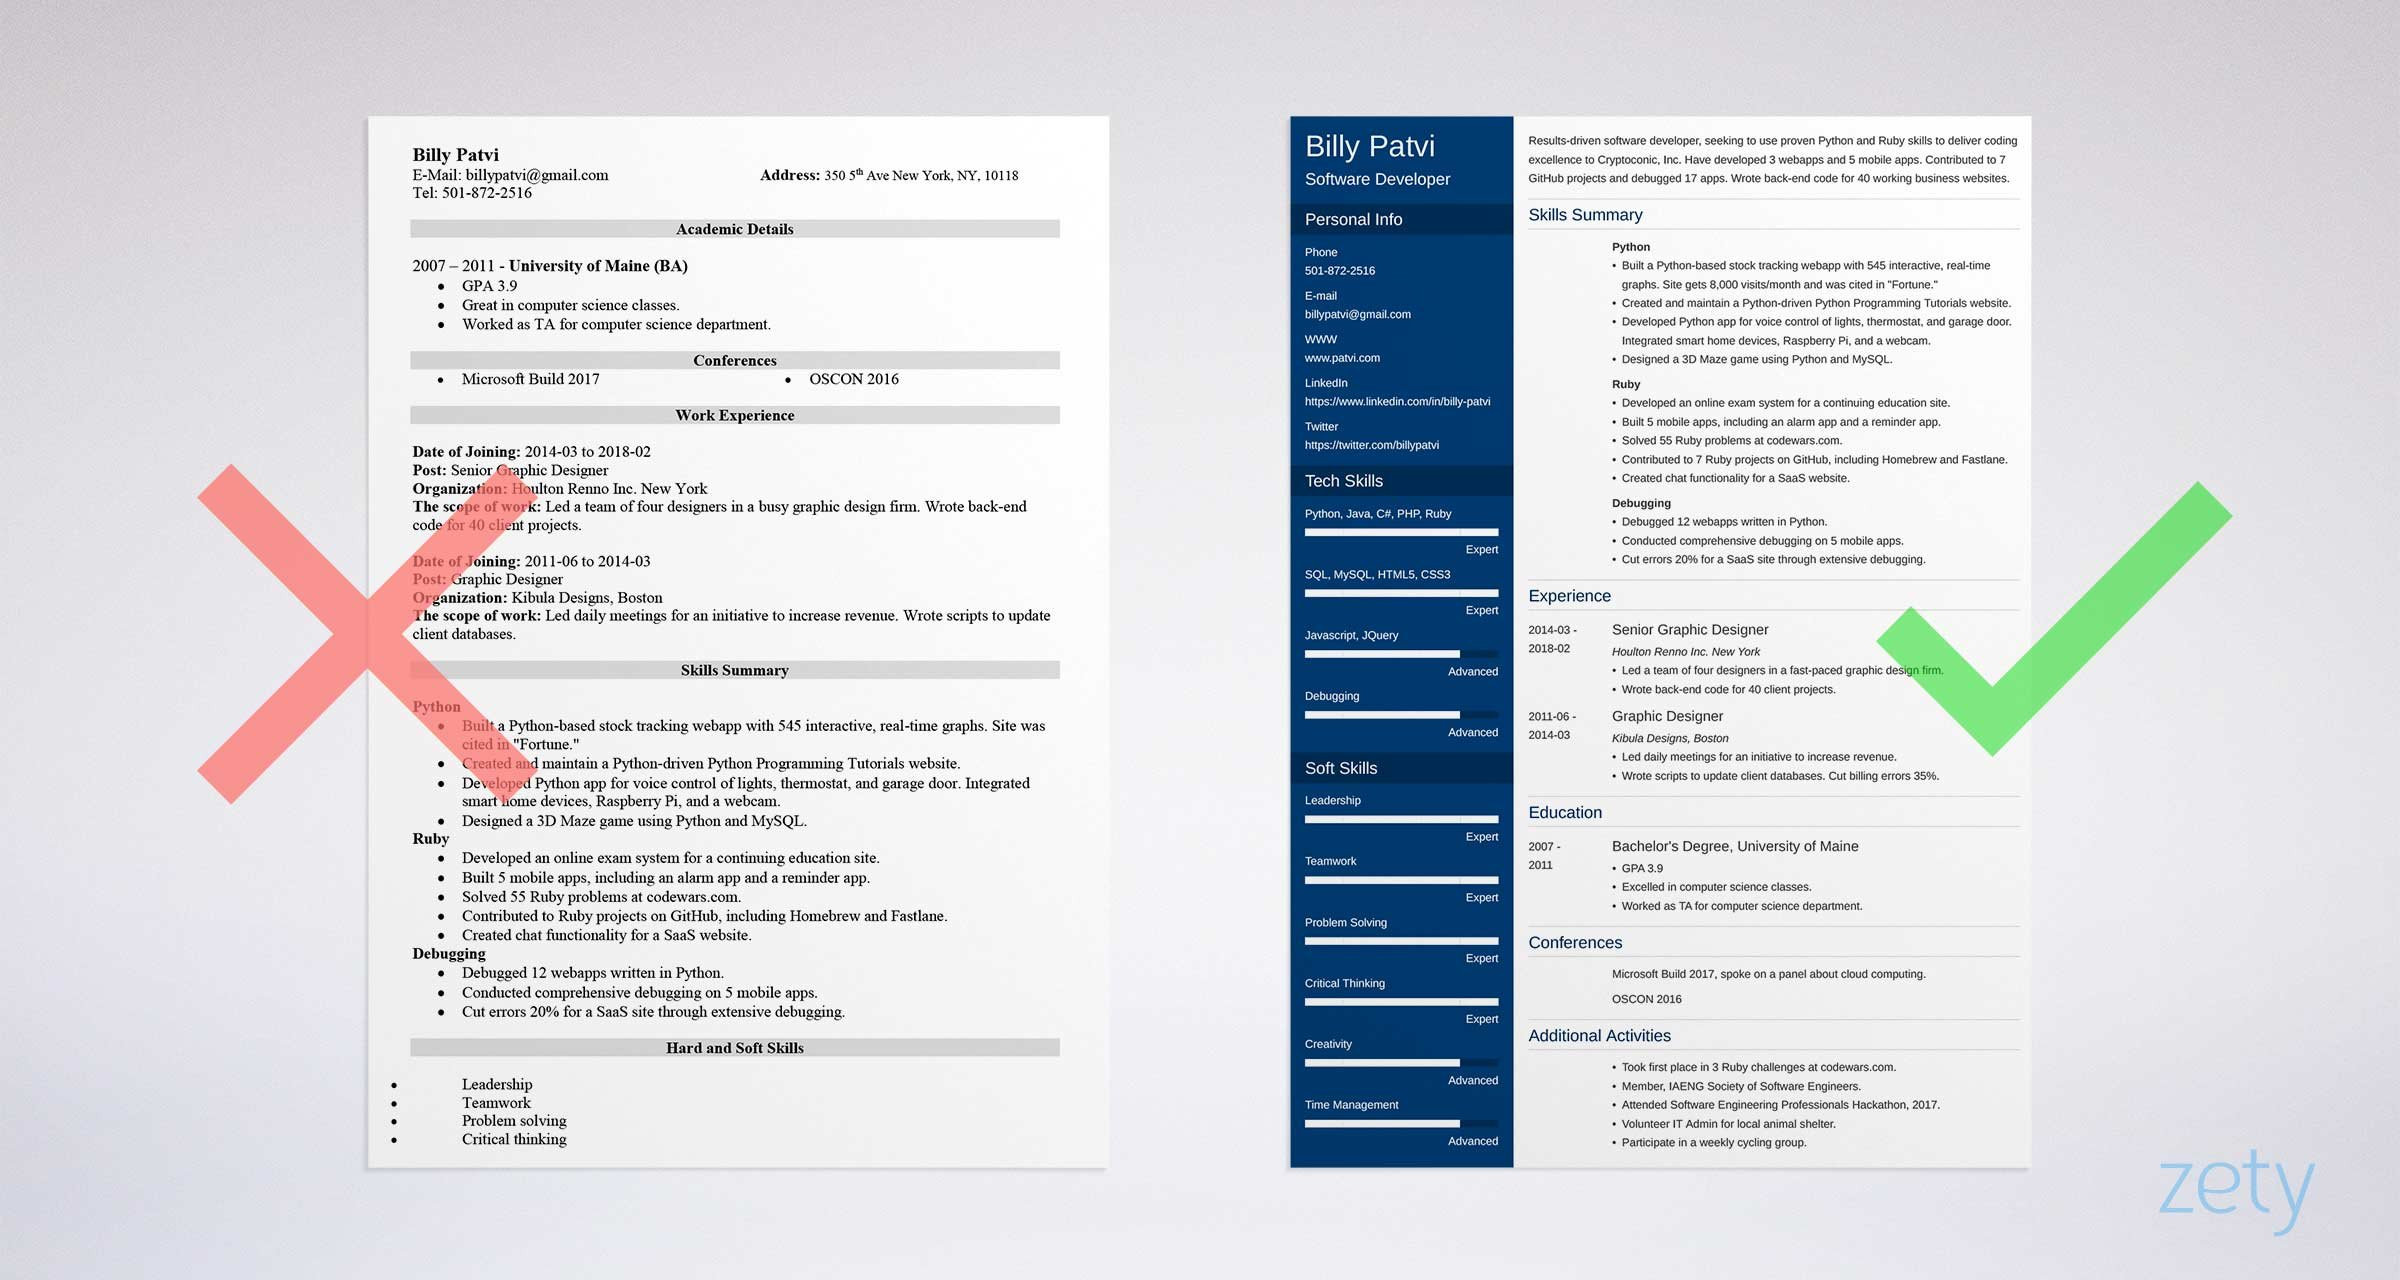 Sample Resume Shift Change Request form Career Change Resume Example (guide, Samples & Tips)